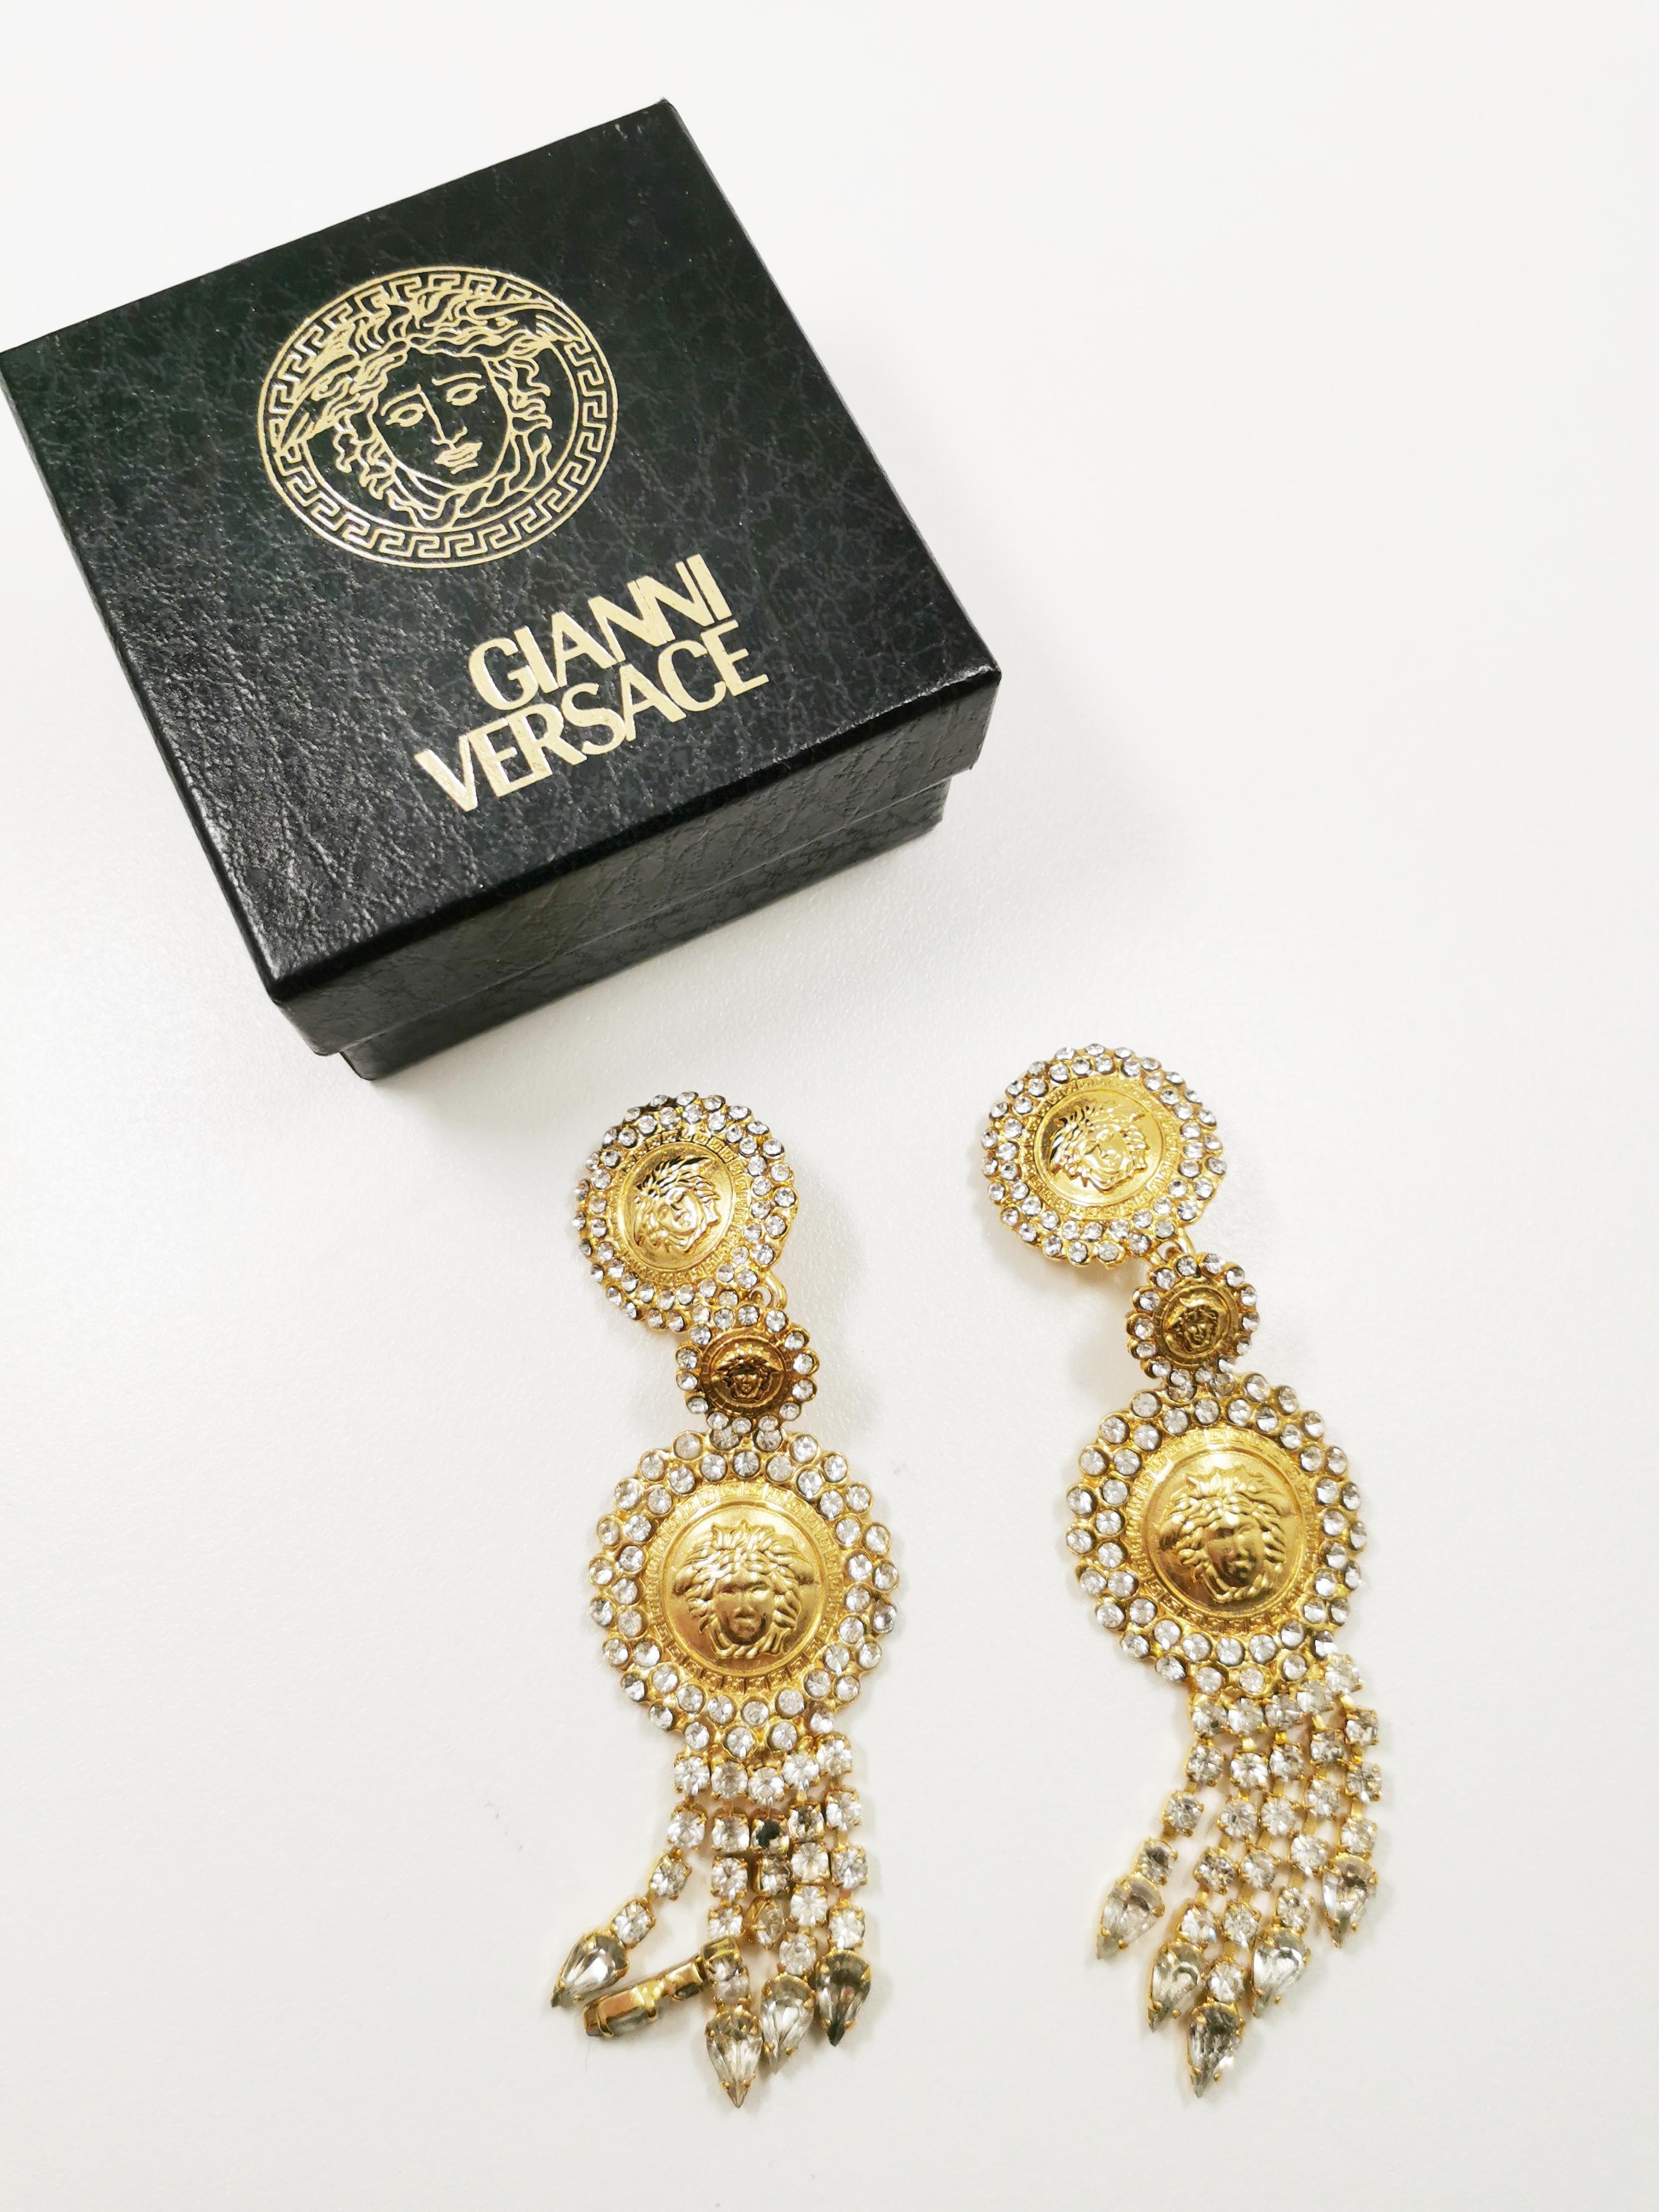 gianni versace earrings